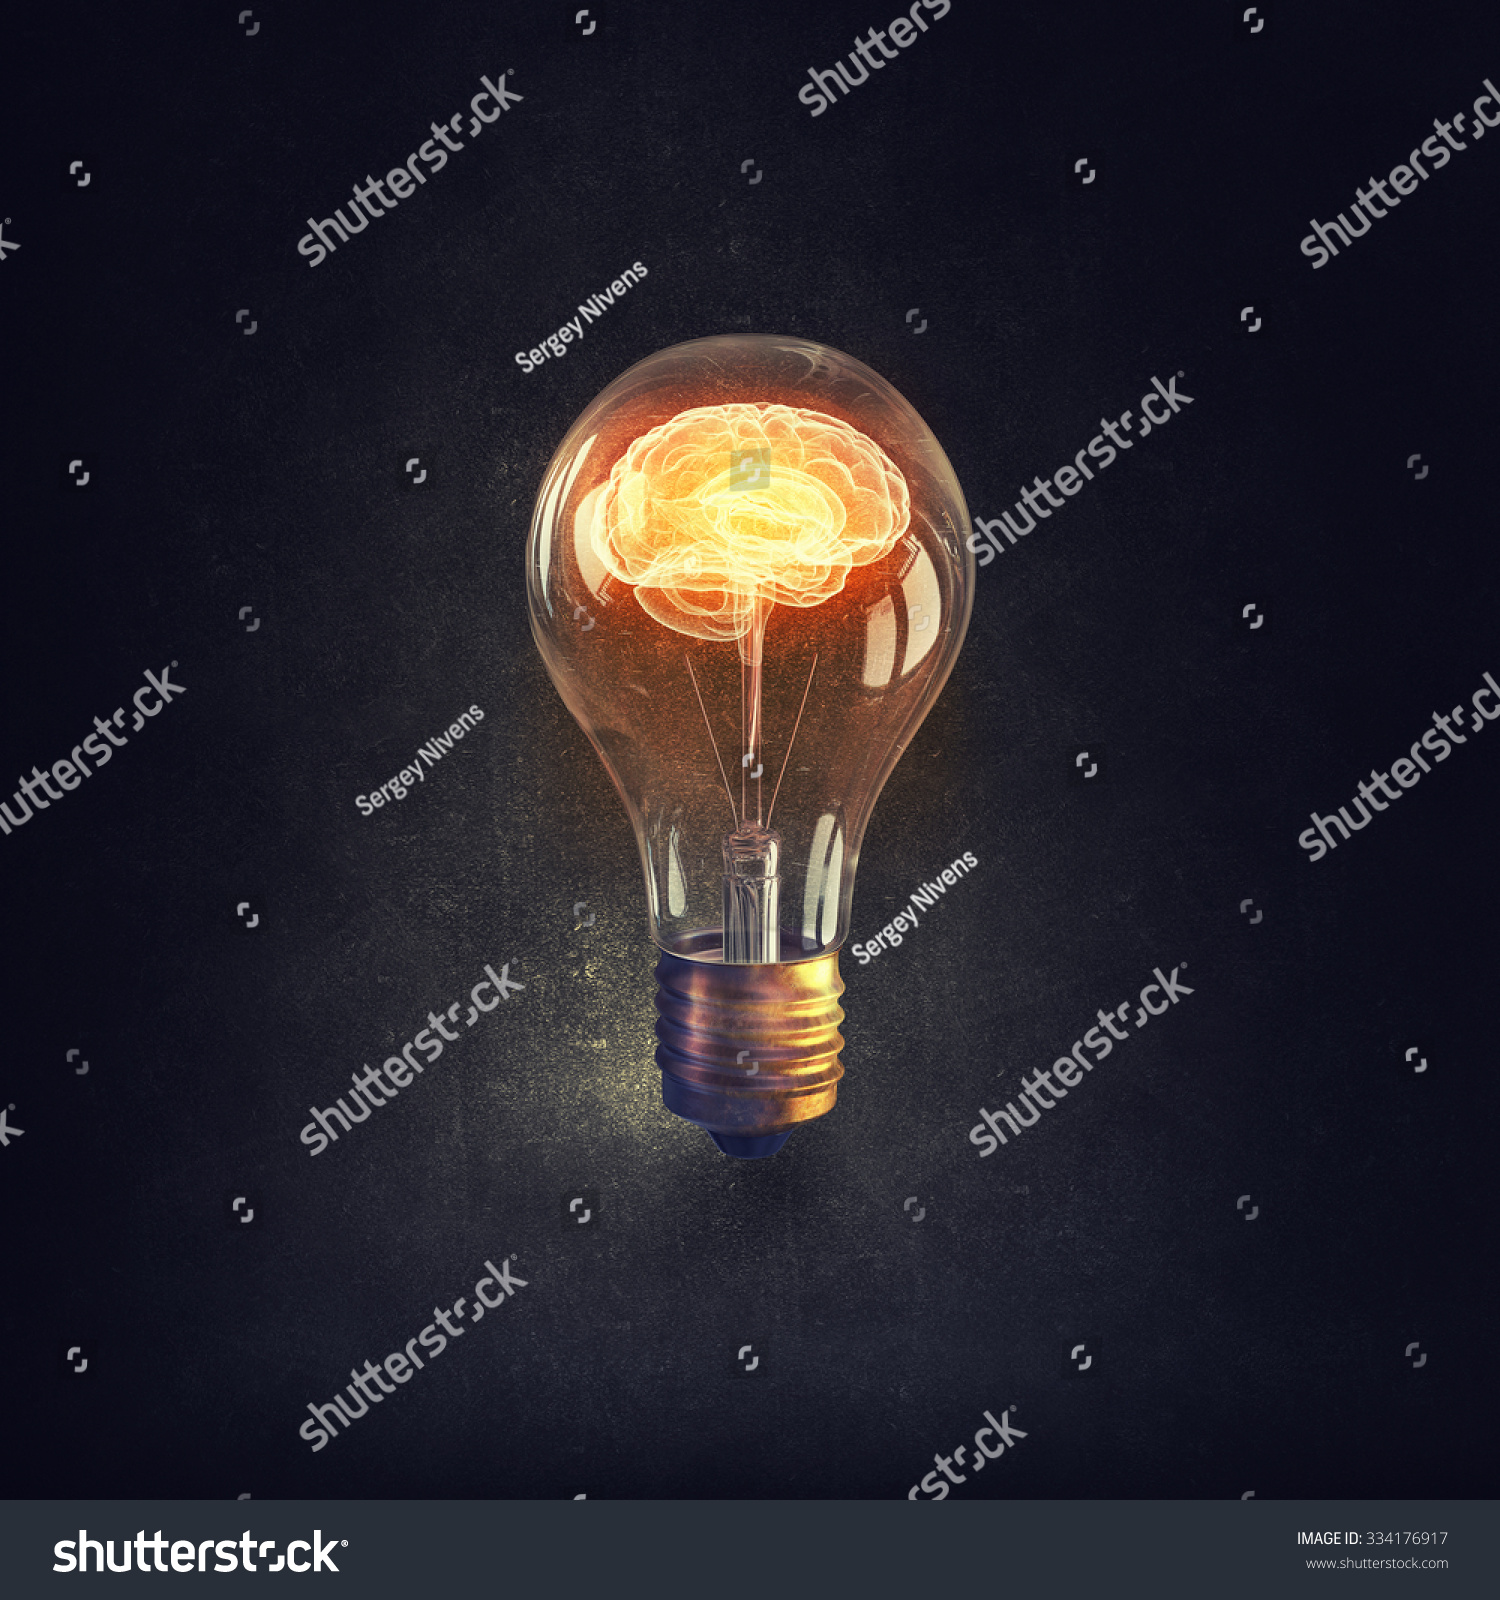 Human brain glowing inside of light bulb on dark background #334176917